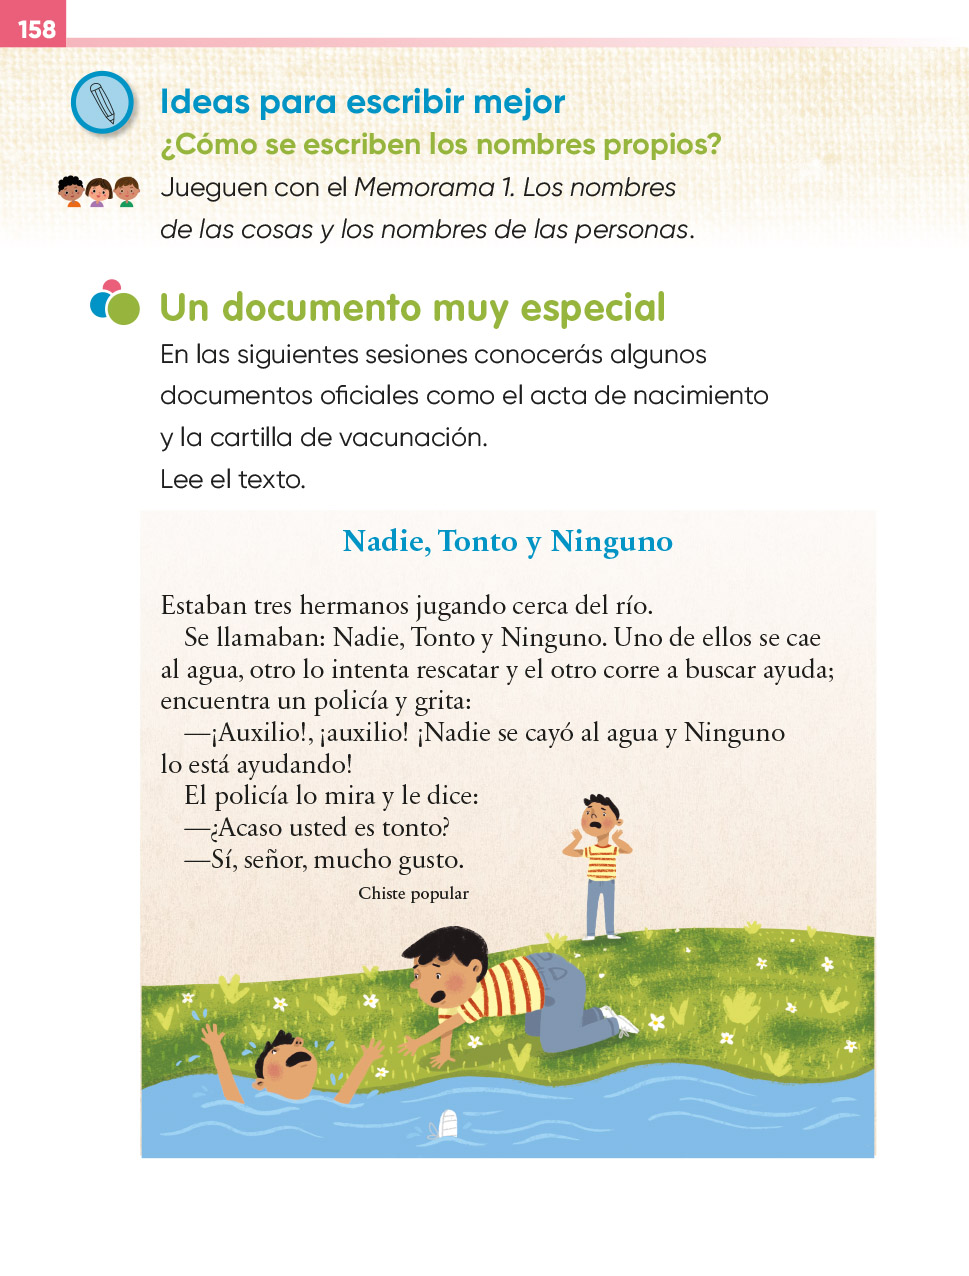 Lengua Materna Español Segundo Grado 2020 2021 Página 158 De 225 Libros De Texto Online 5580